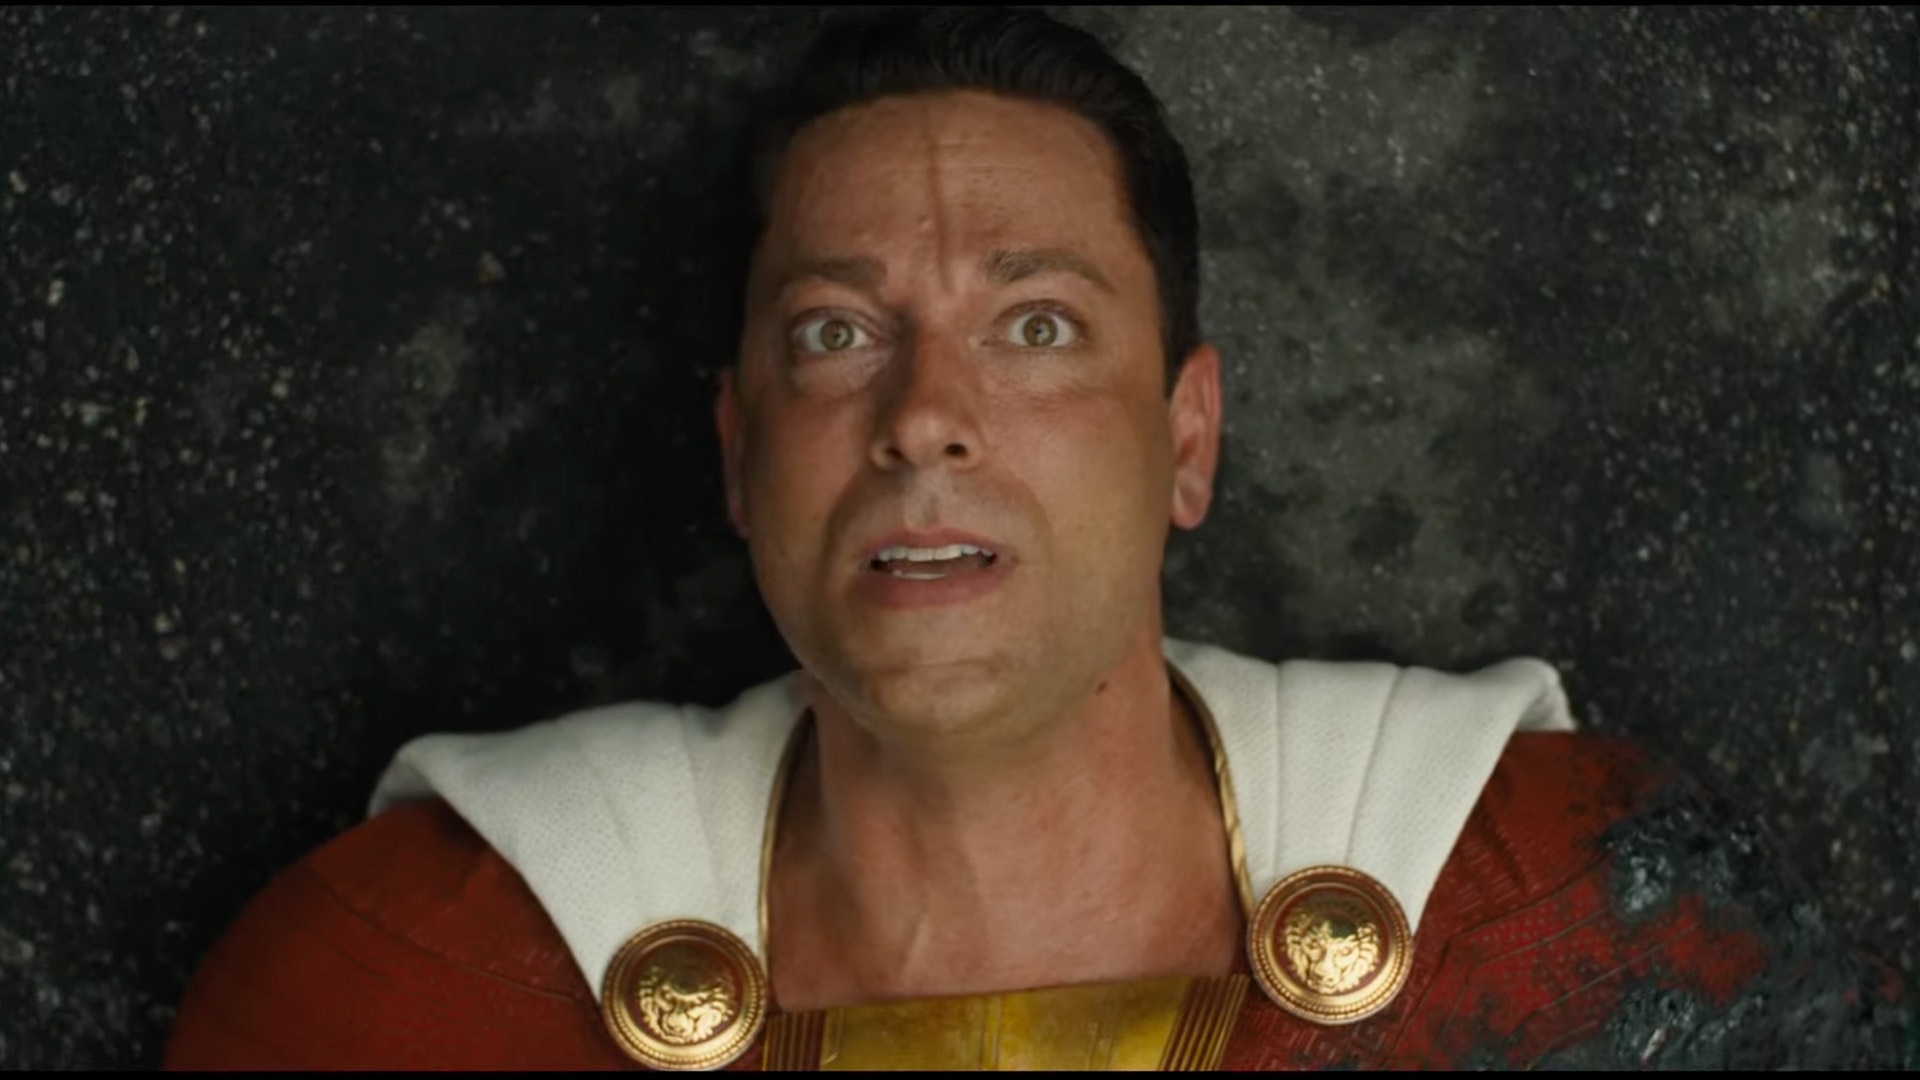 Shazam! Fury of the Gods' Trailer Drops at Comic-Con